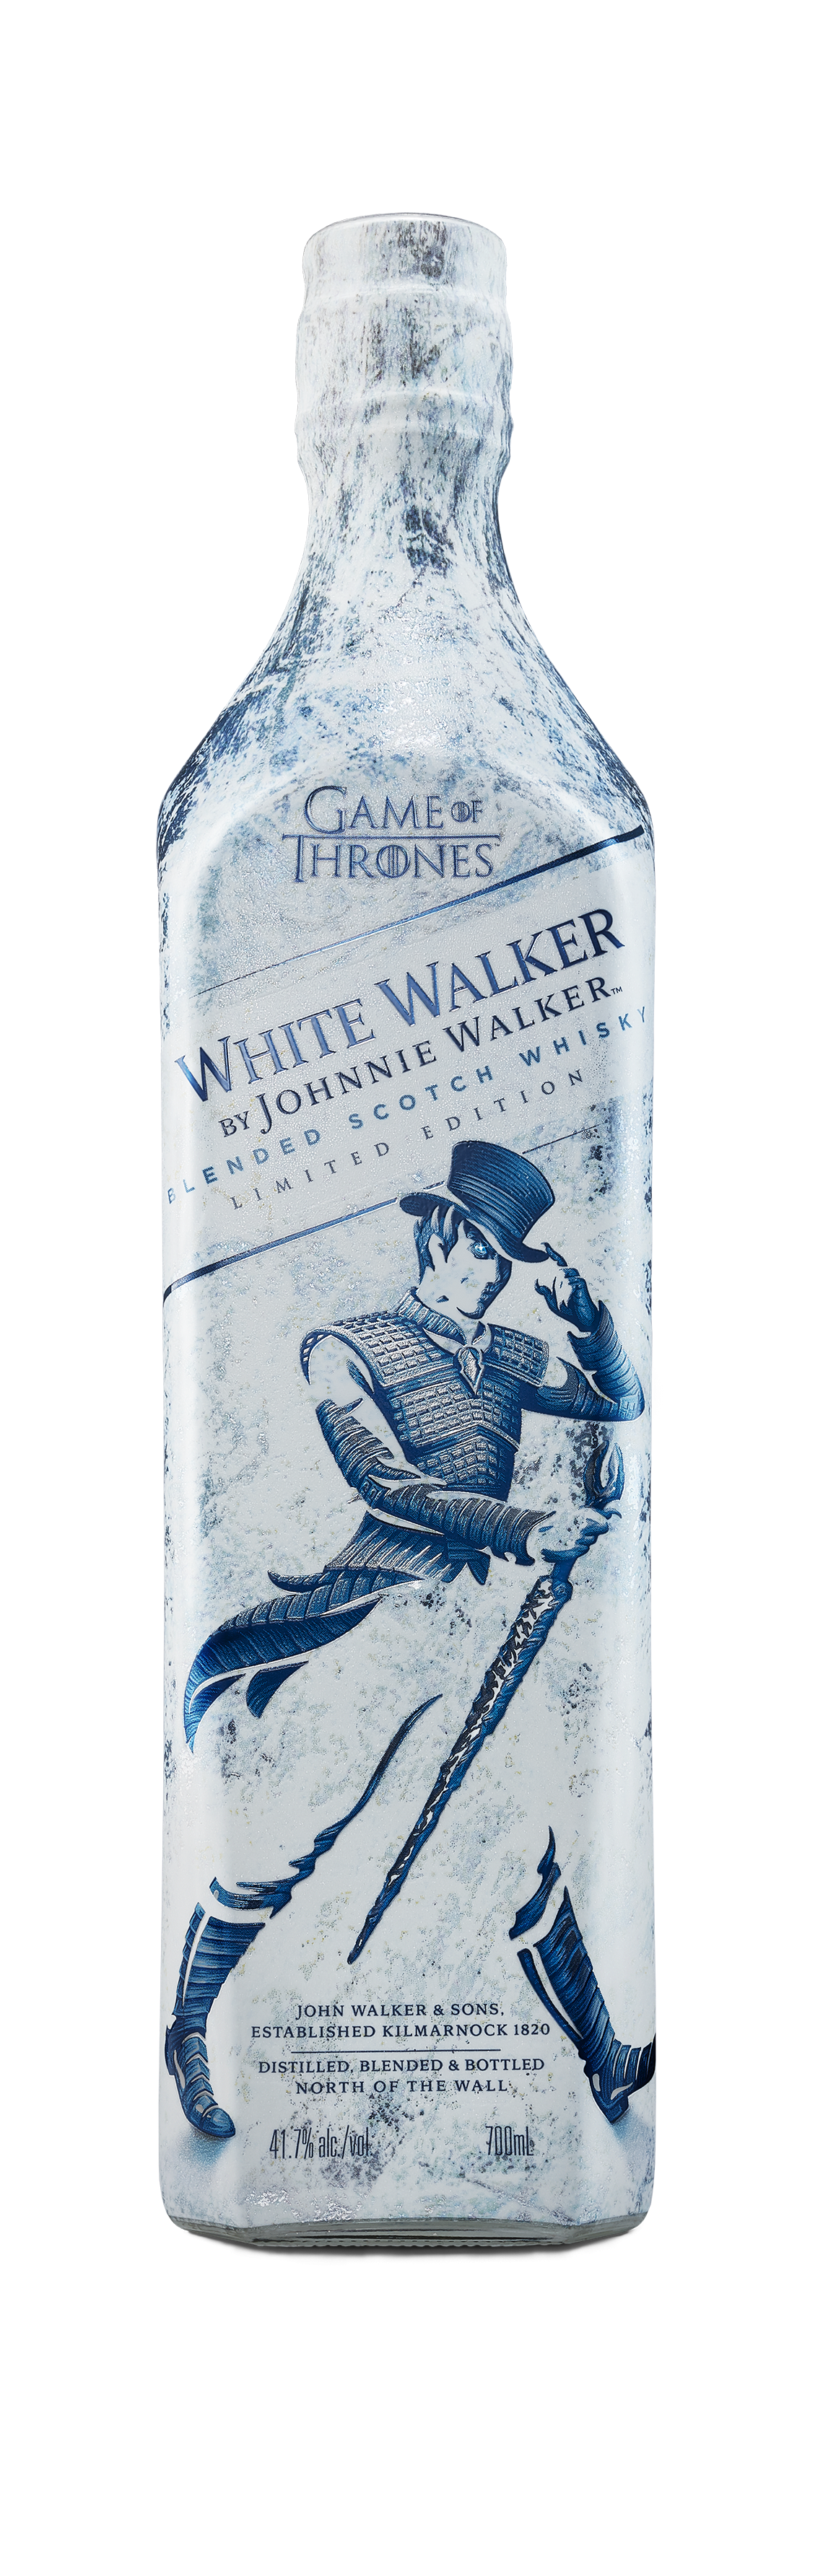 Johnnie walker red label 1l 40% scotch whisky